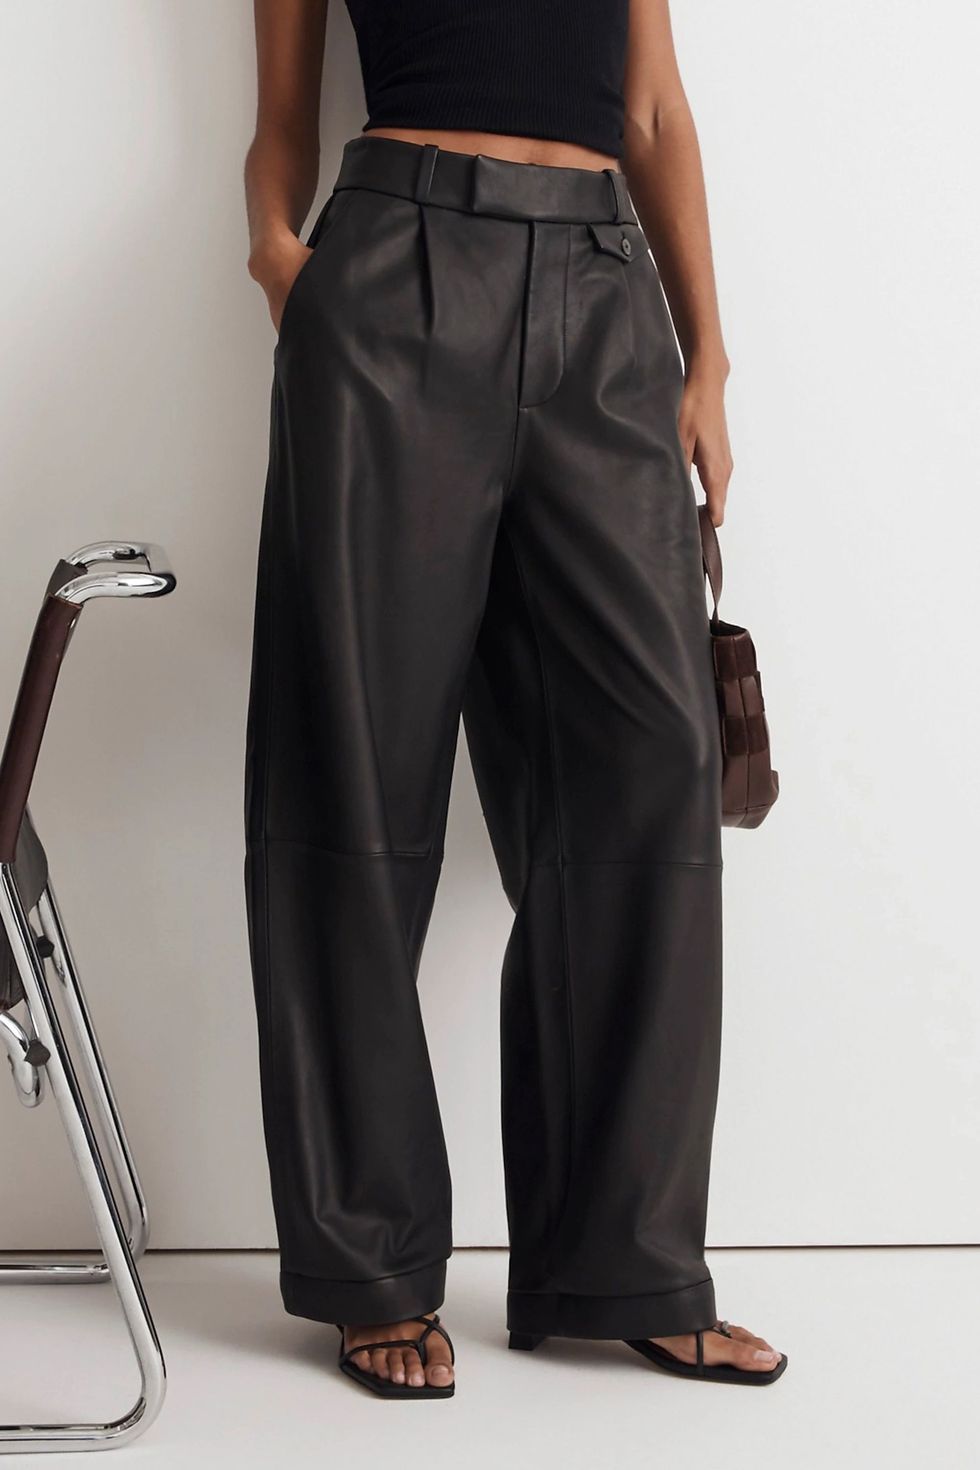 Zara Split Hem Trouser Pants Large Black Straight Leg High Rise Stretch  Office